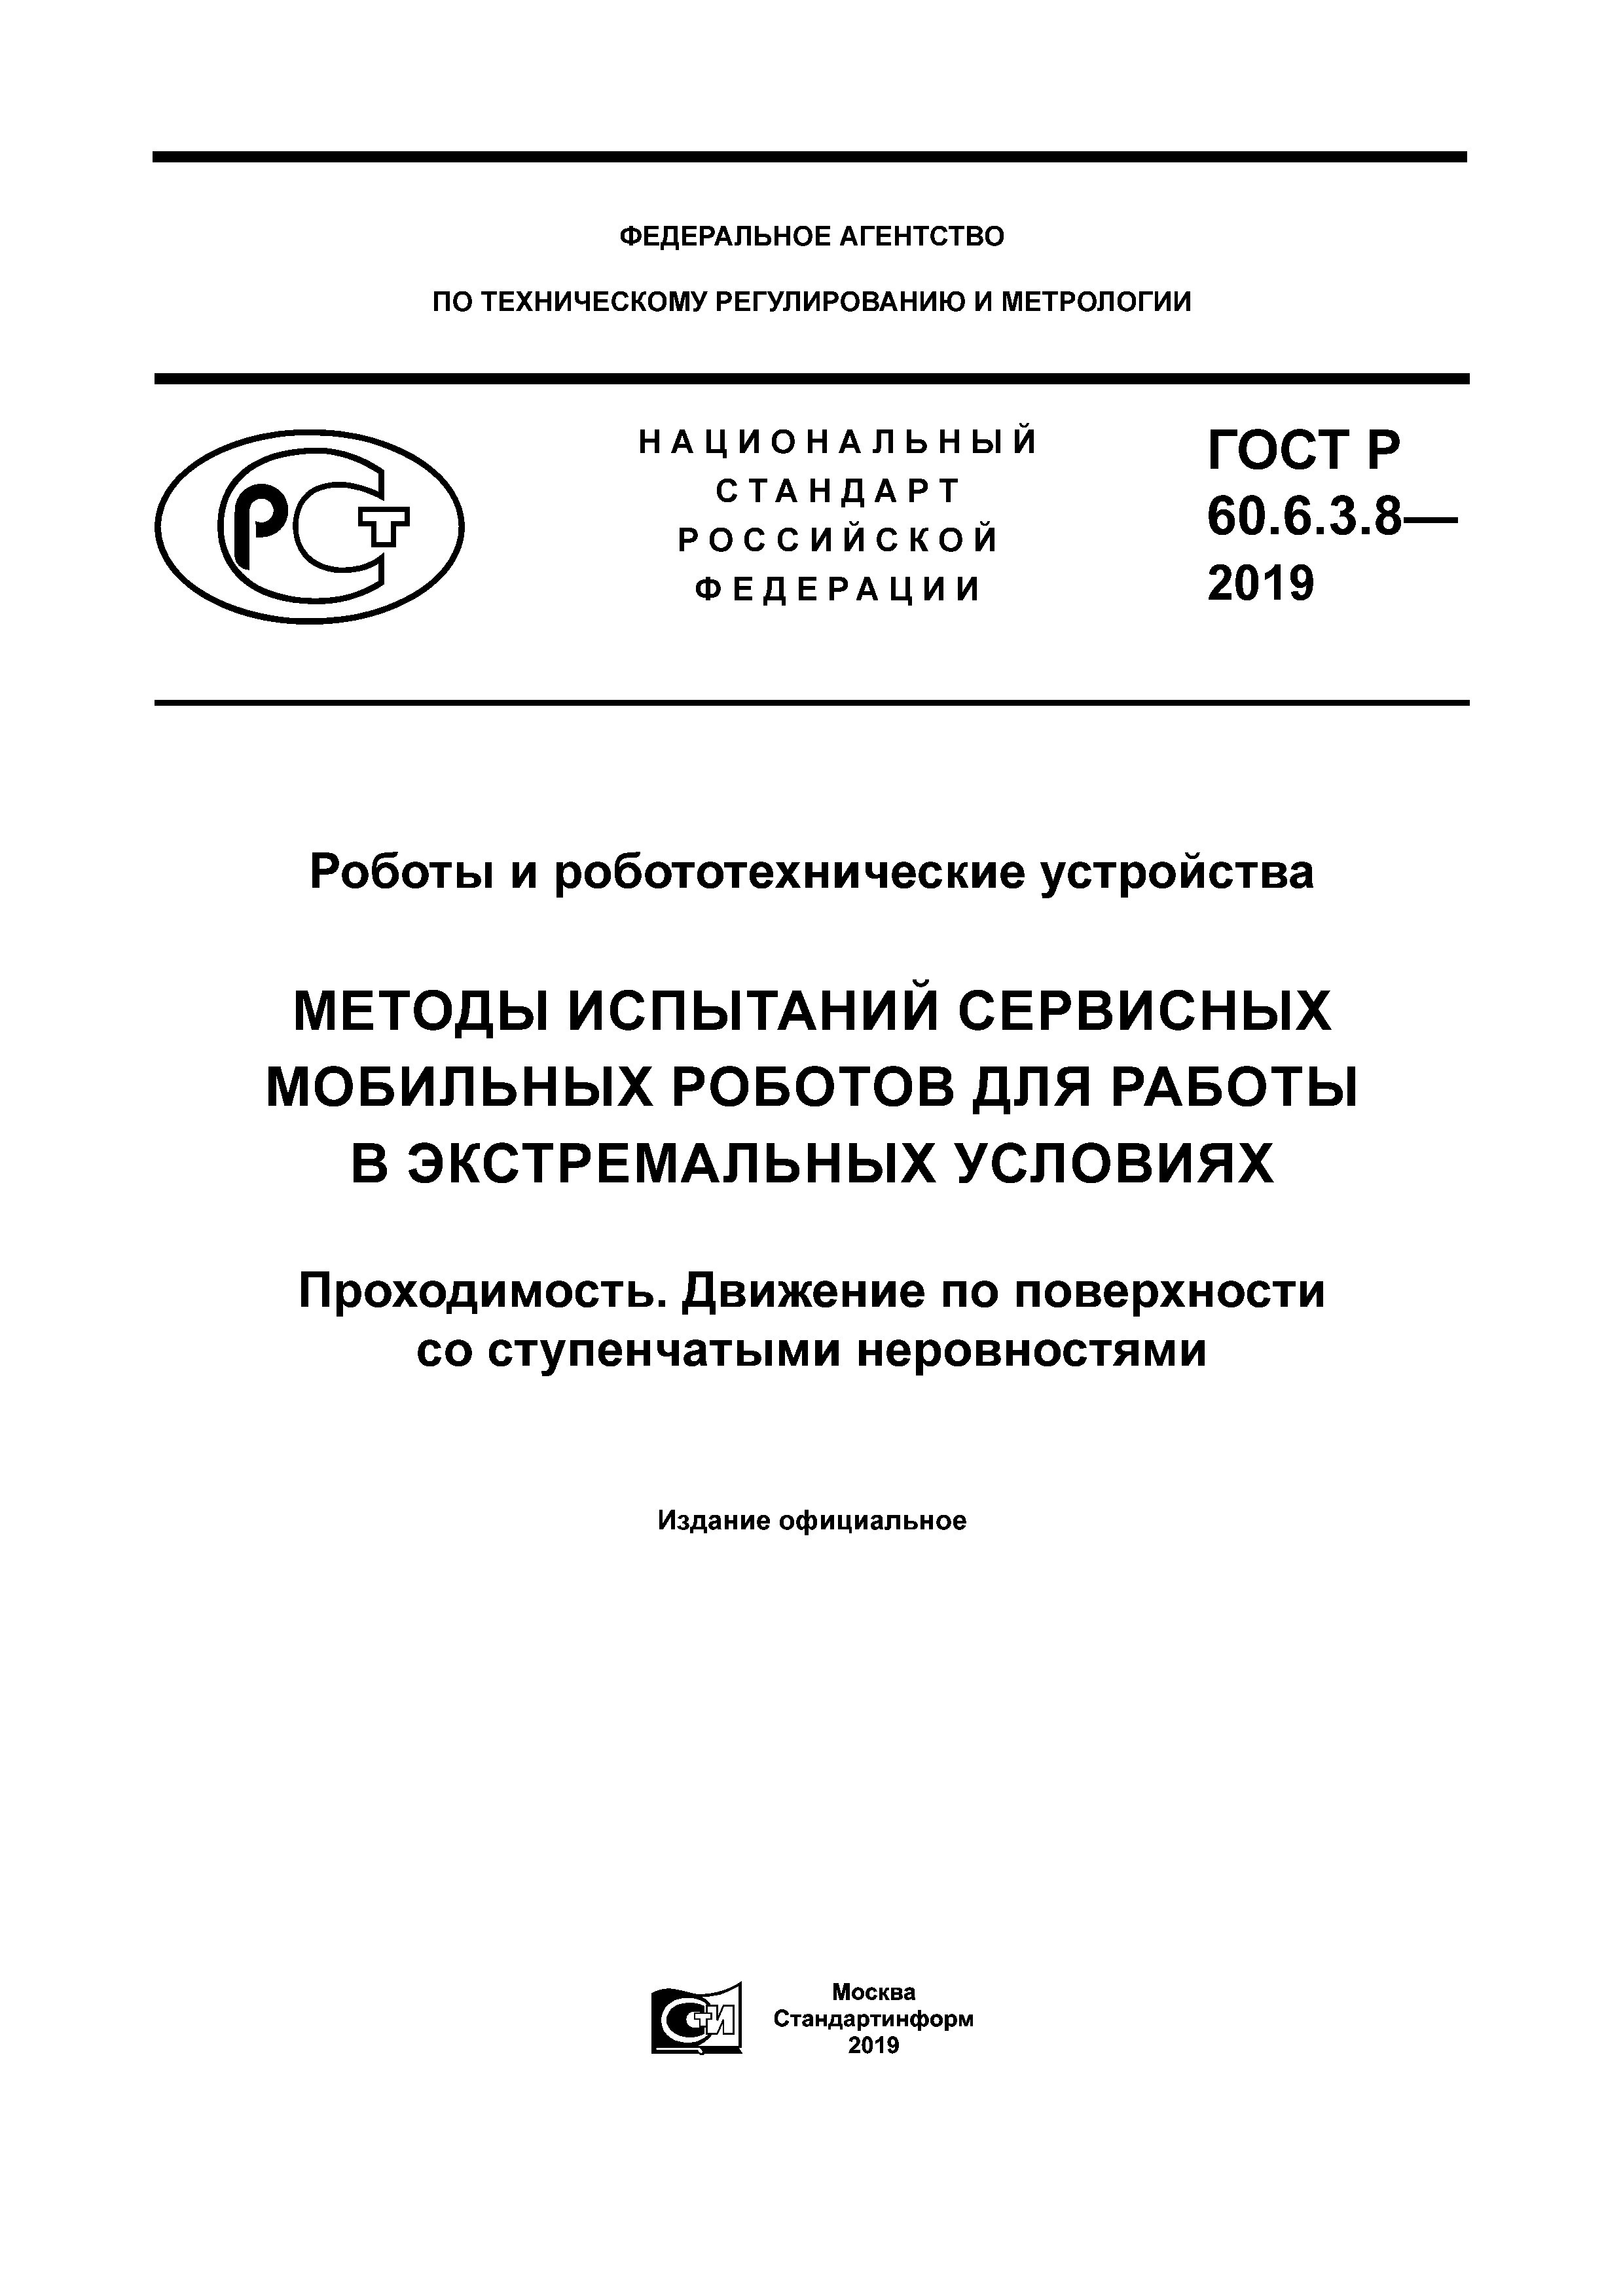 ГОСТ Р 60.6.3.8-2019